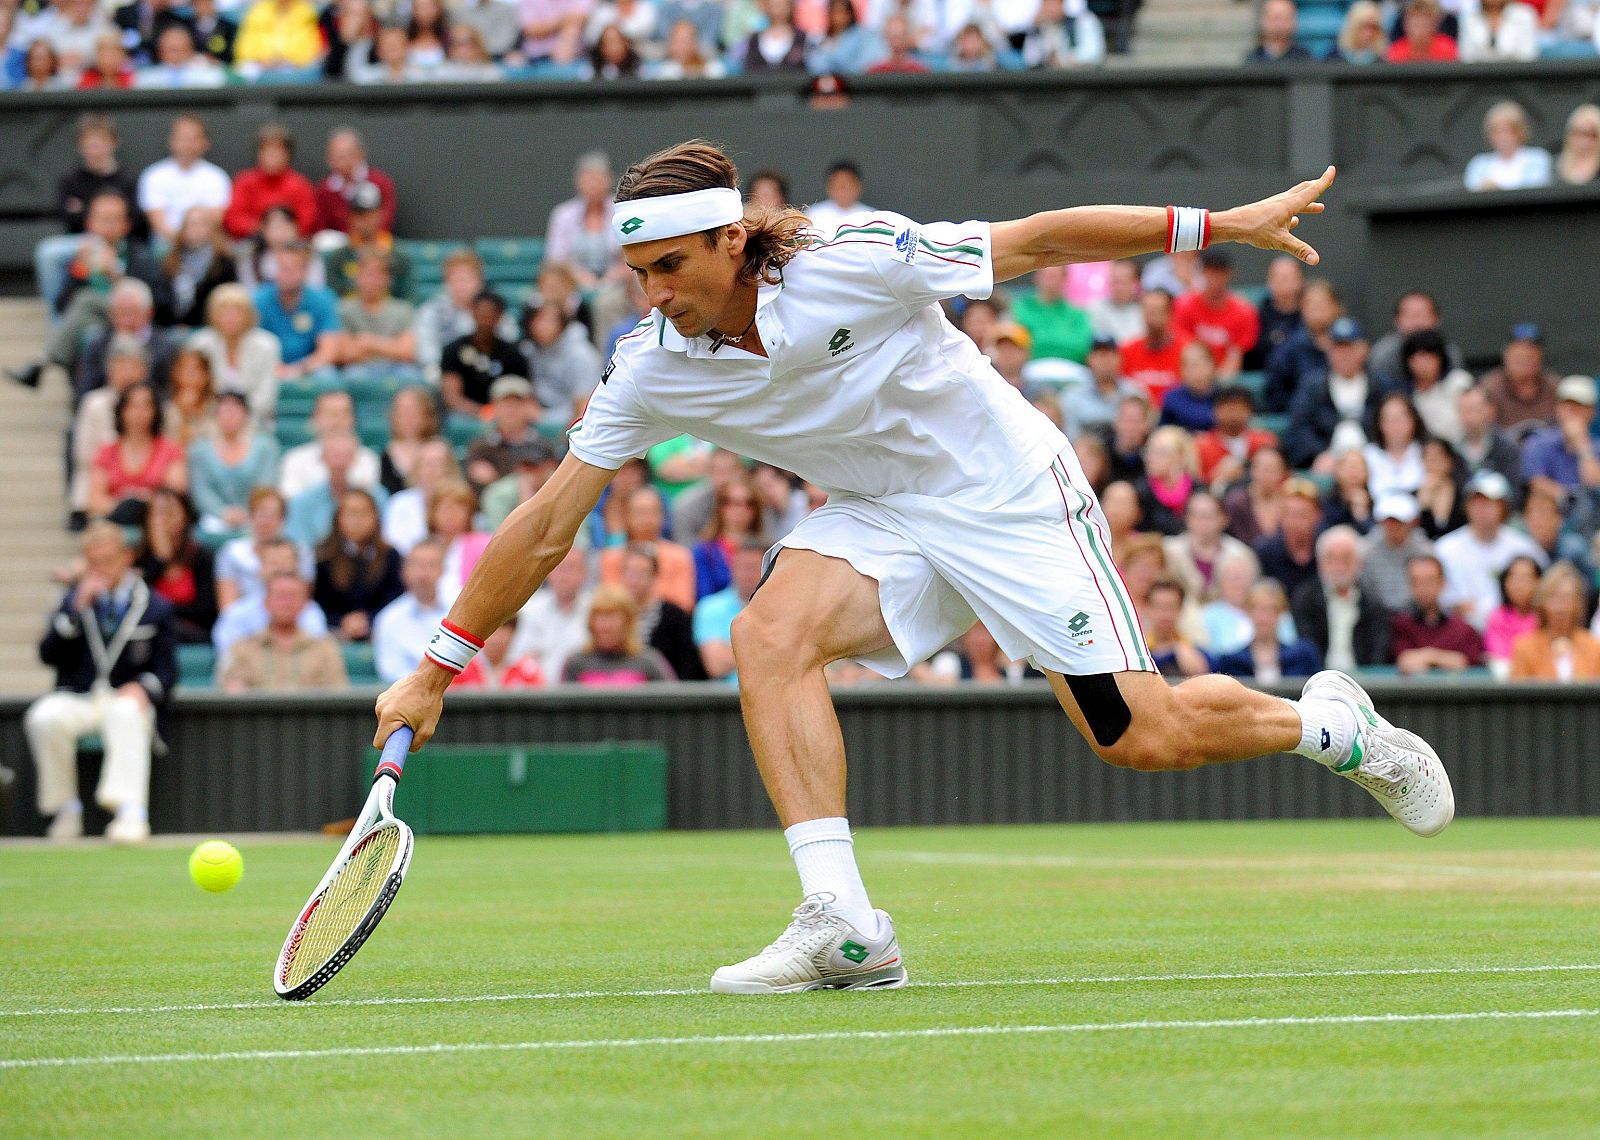 A pesar de su eliminación, Ferrer ascenderá al número 4 de la ATP al término de Wimbledon.